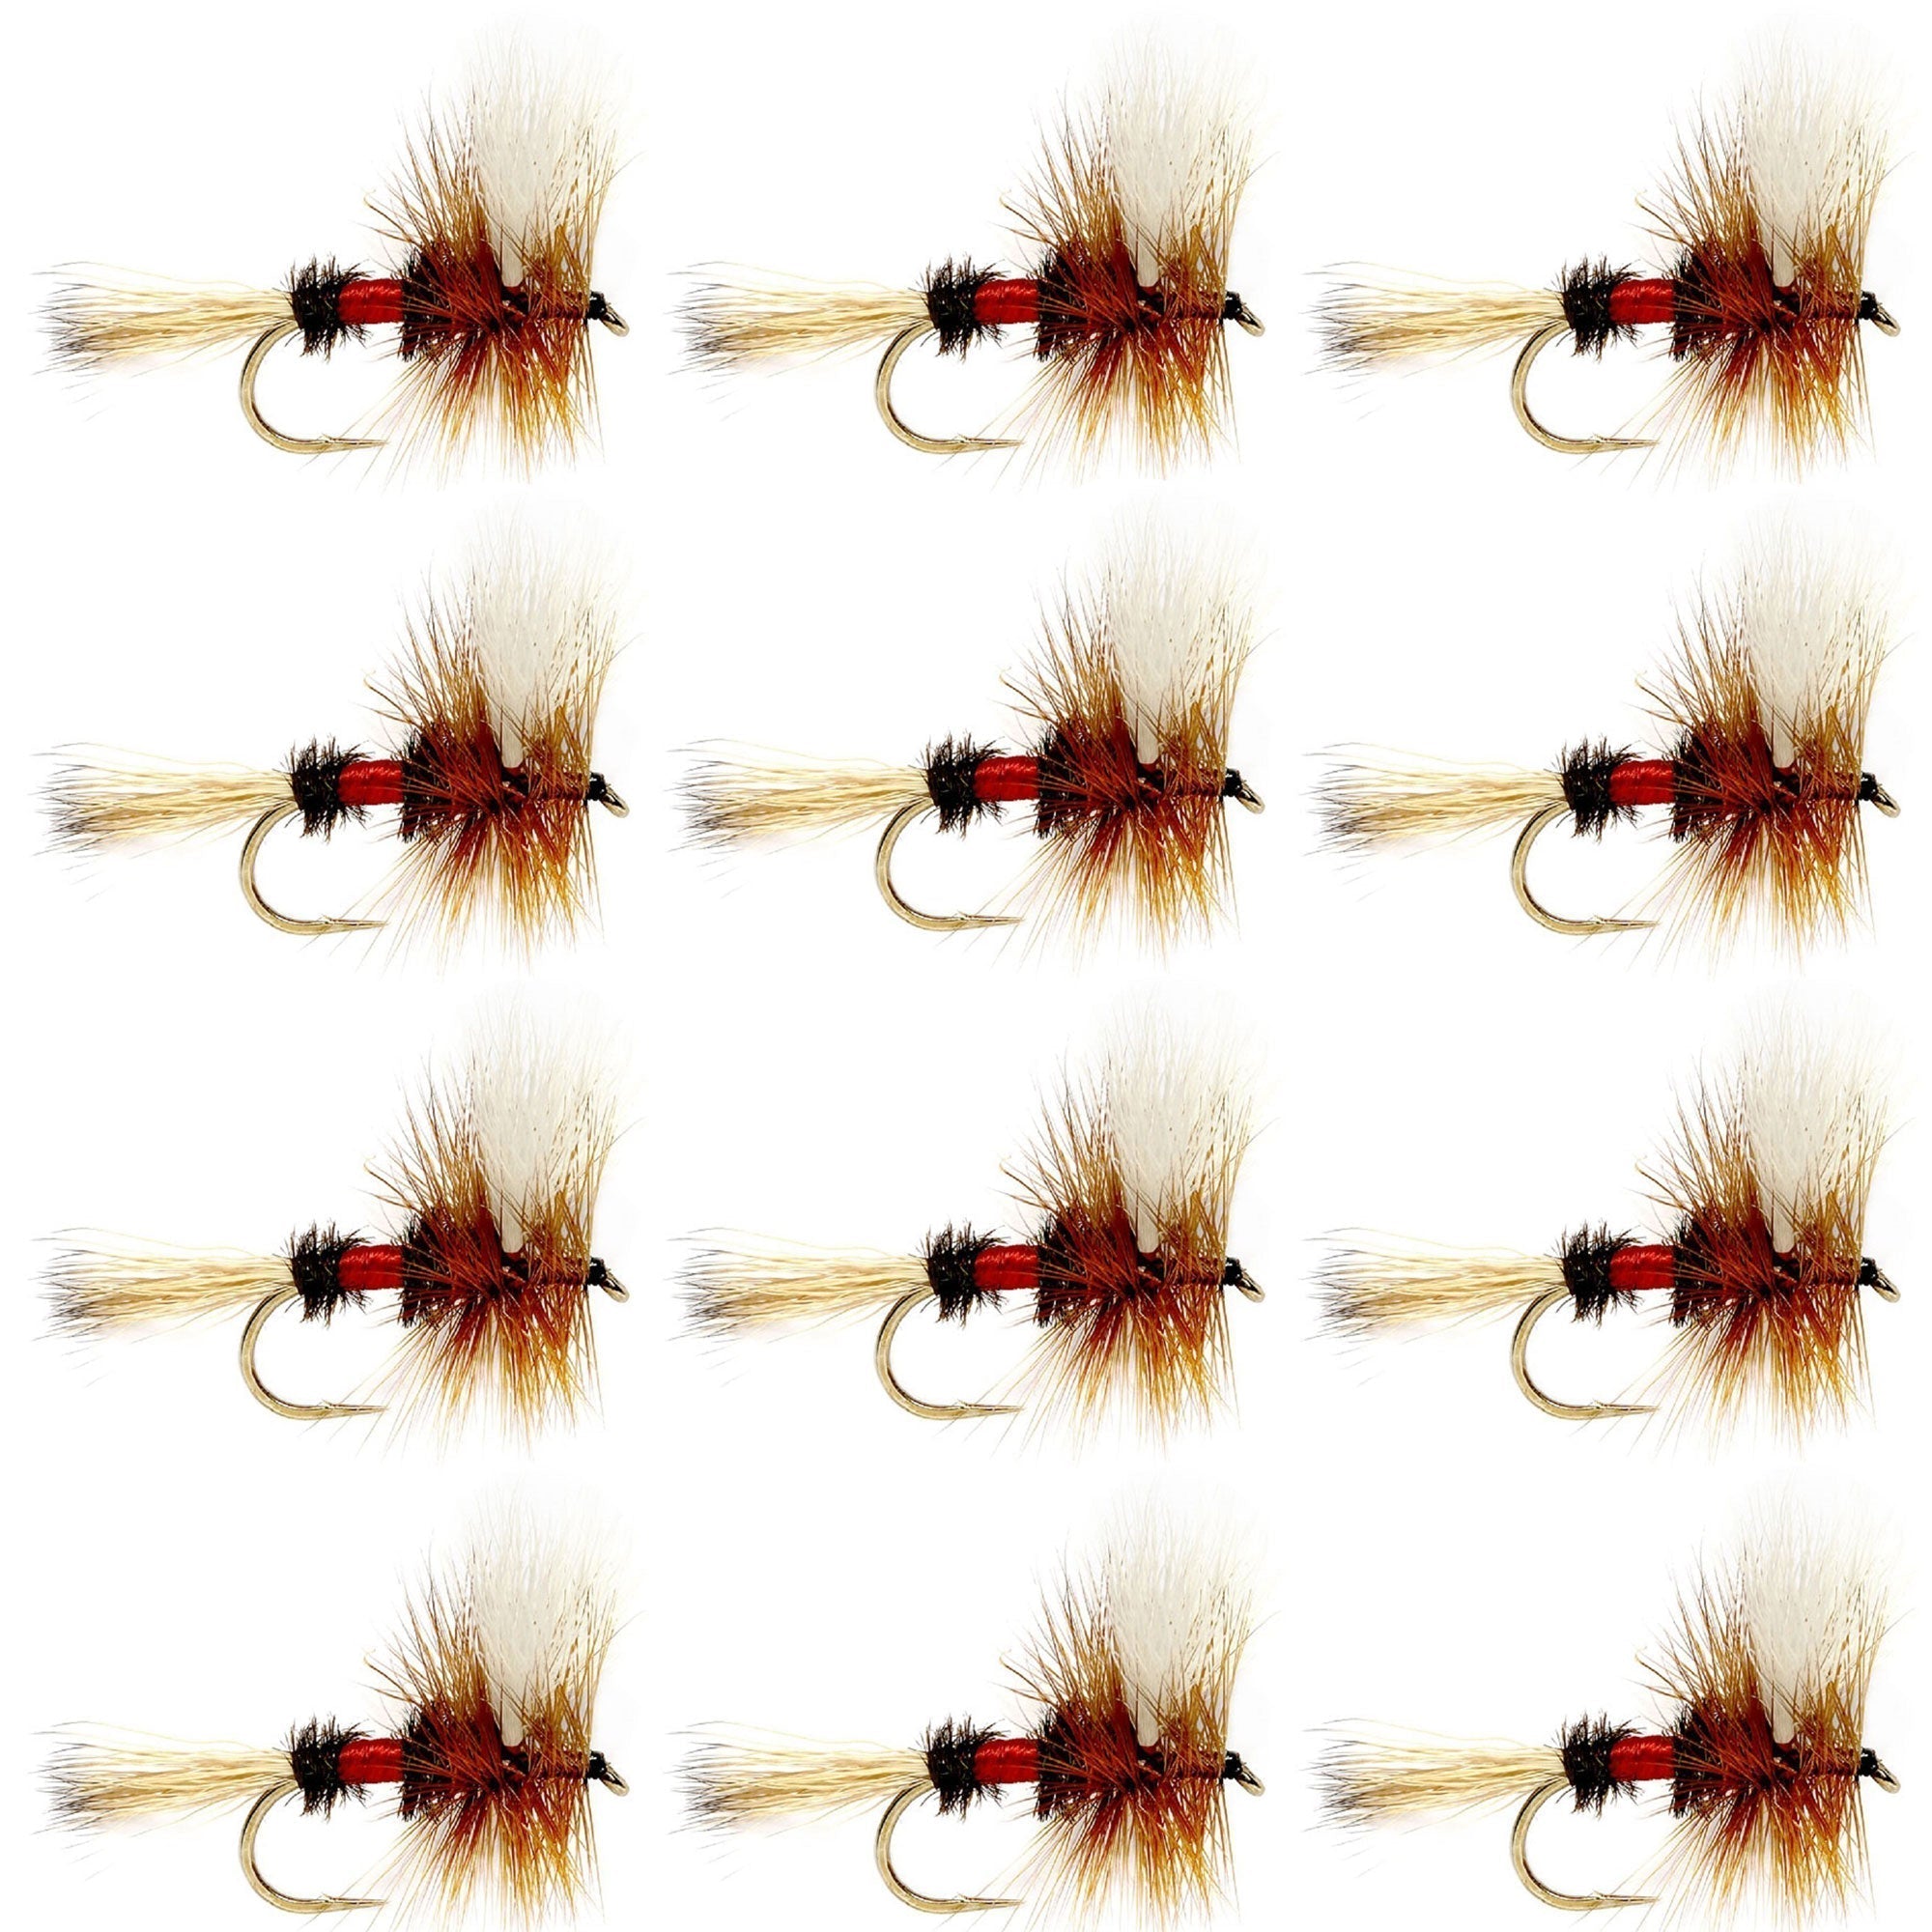 Royal Wulff Classic Trout Dry Fly Fishing Flies - Set of 12 Flies Size 16 - One Dozen